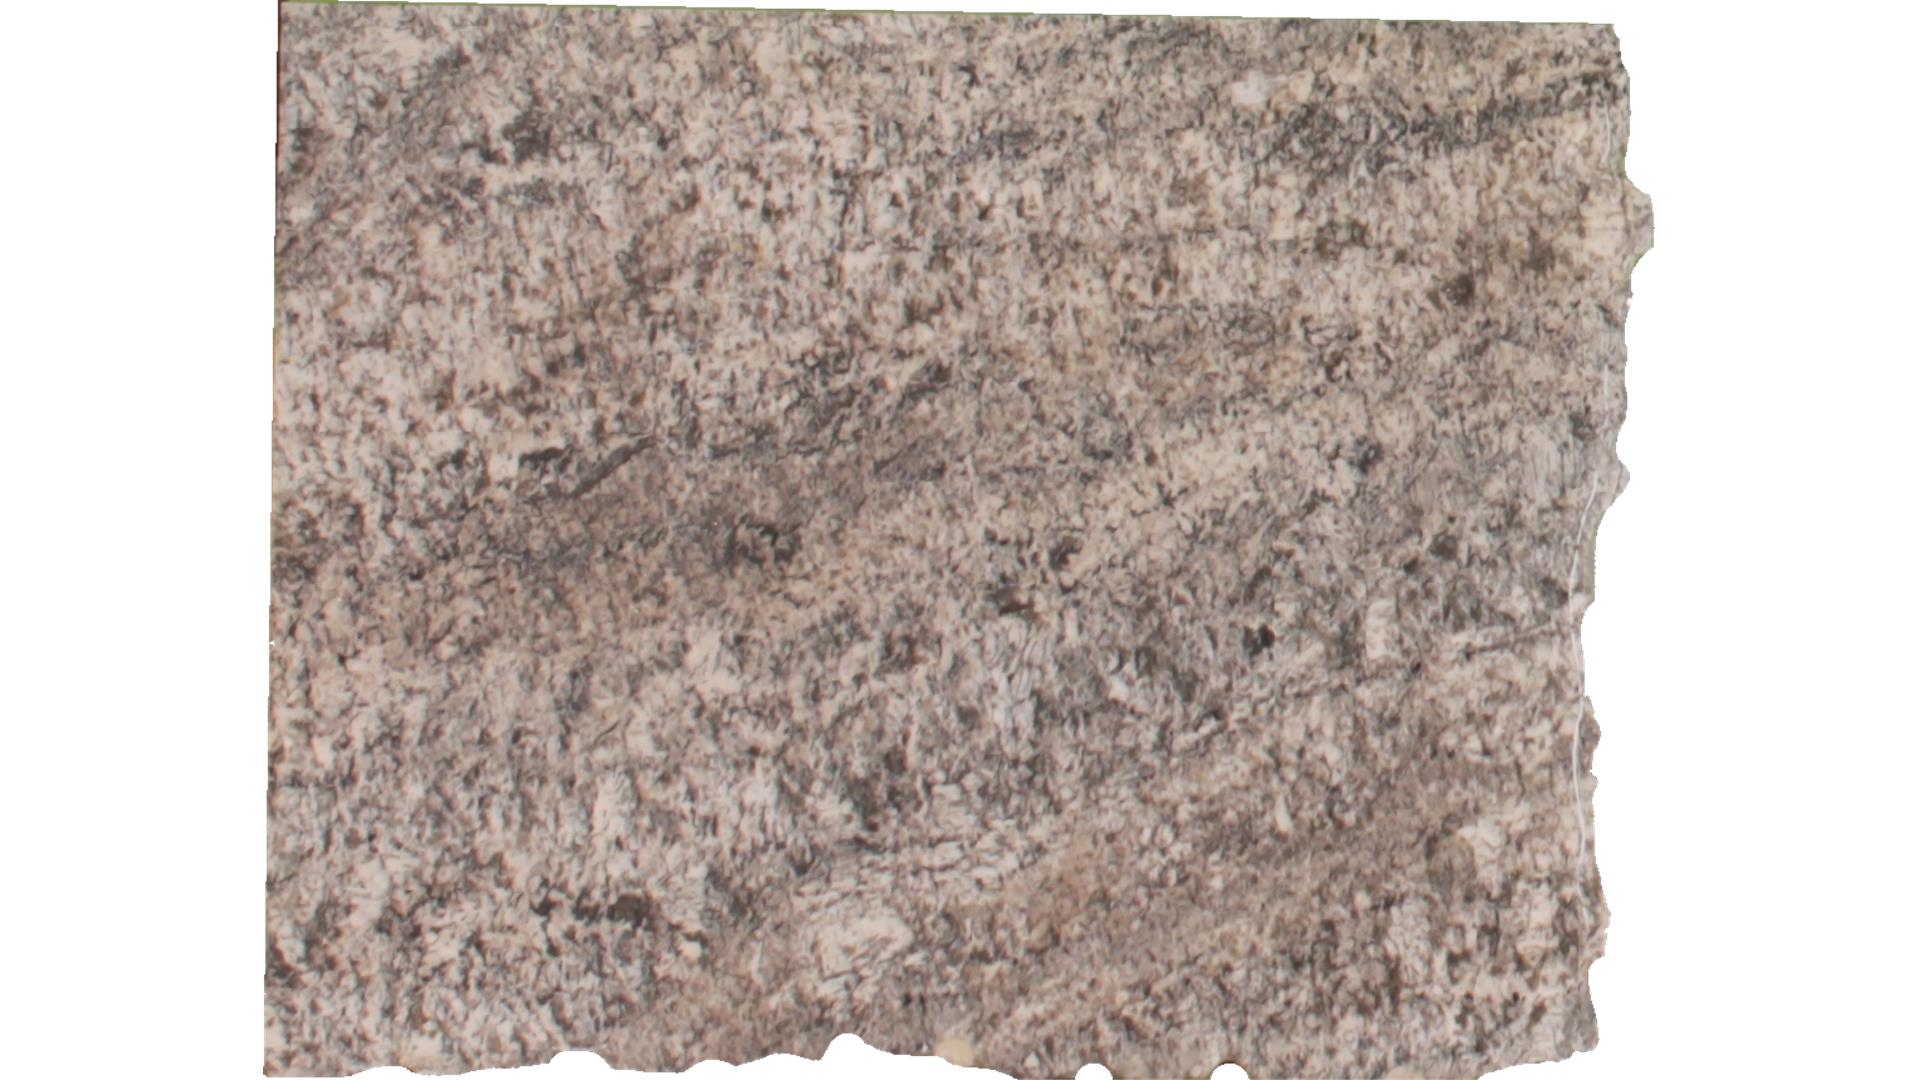 Torroncino Granite Slabs